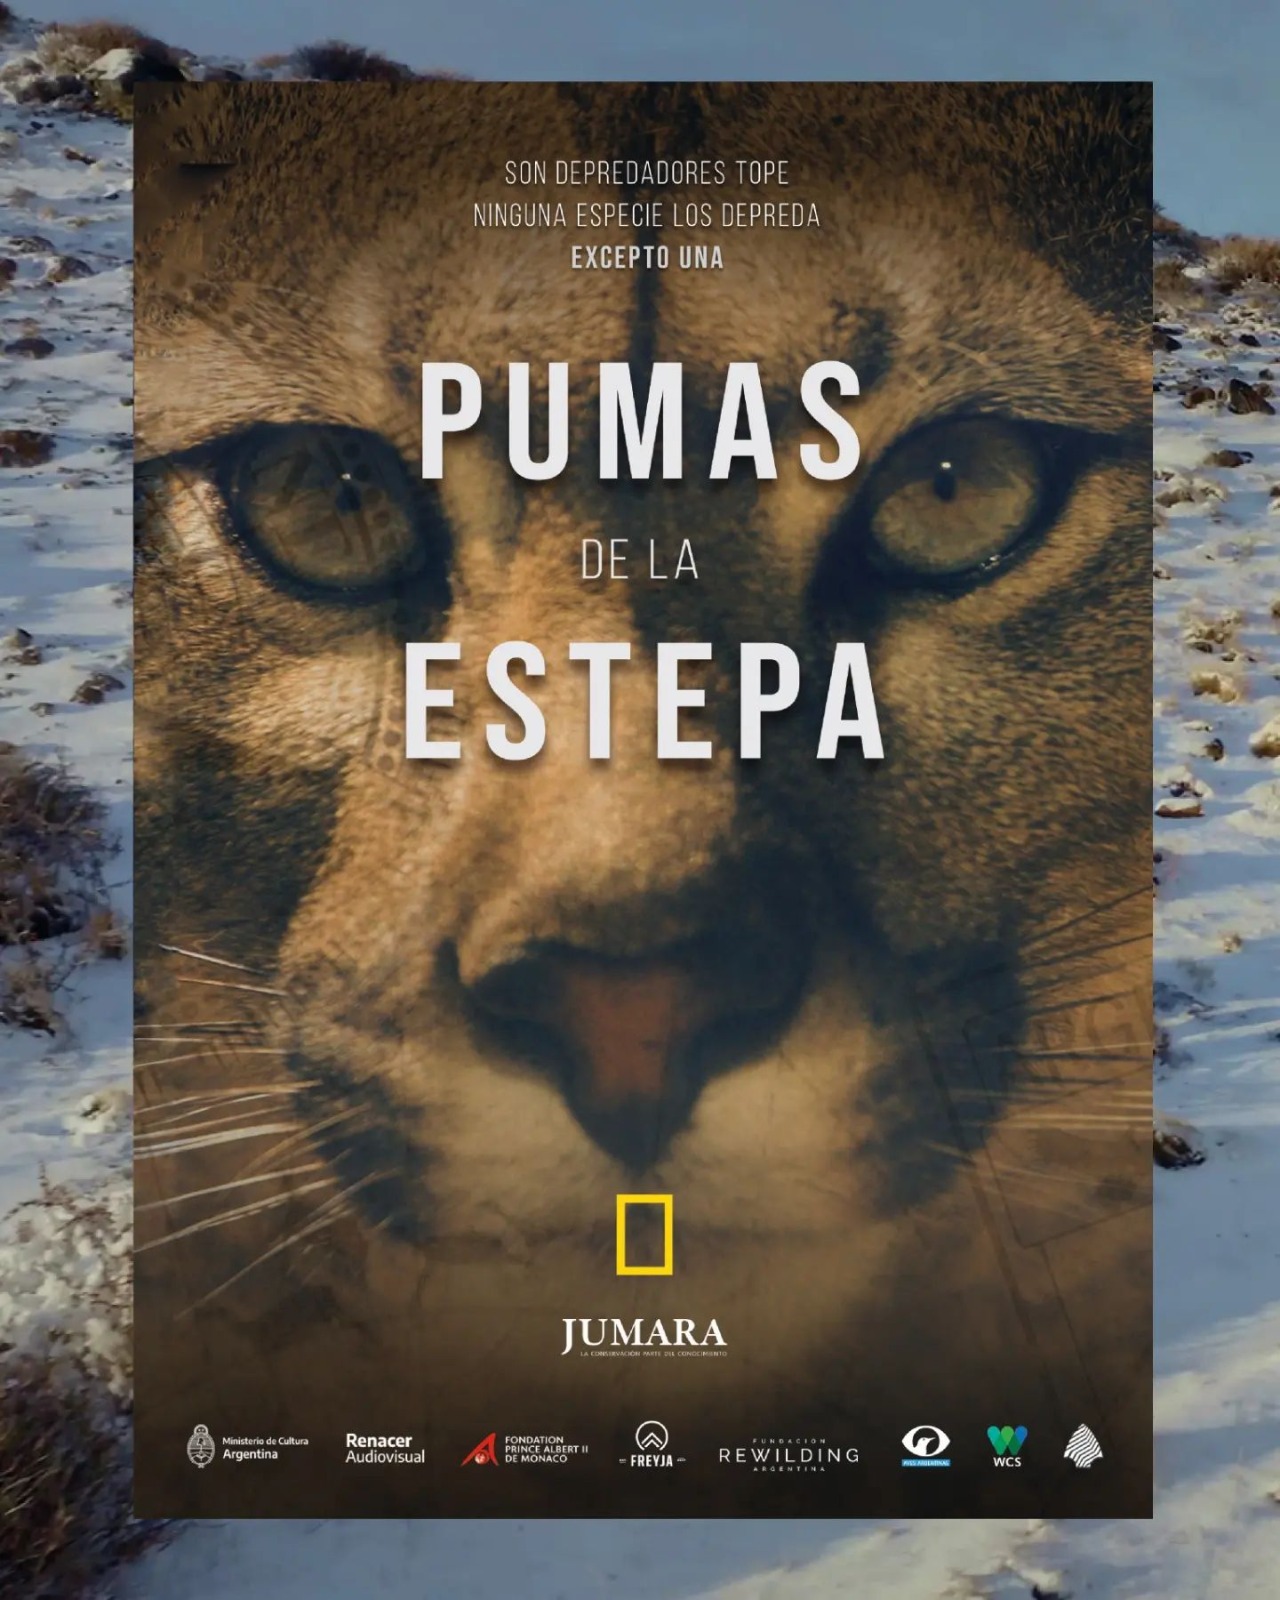 National Geographic documental “Pumas de Estepa” filmado en Santa Cruz - La Prensa Santa Cruz